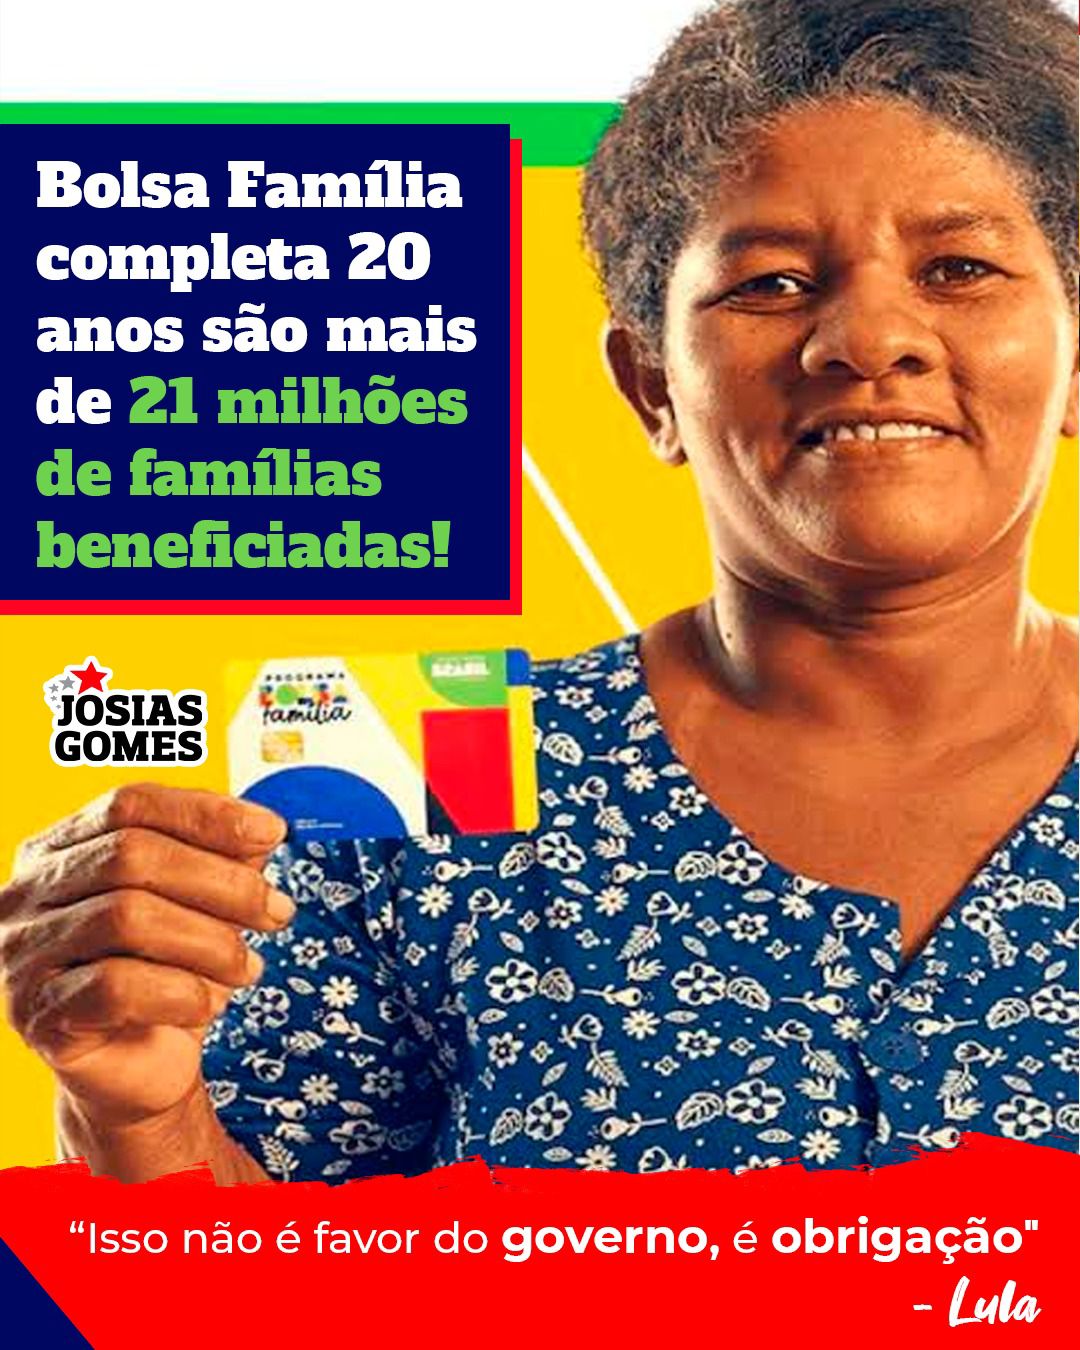 Bolsa Família, 20 Anos Transformando A Vida Dos Brasileiros